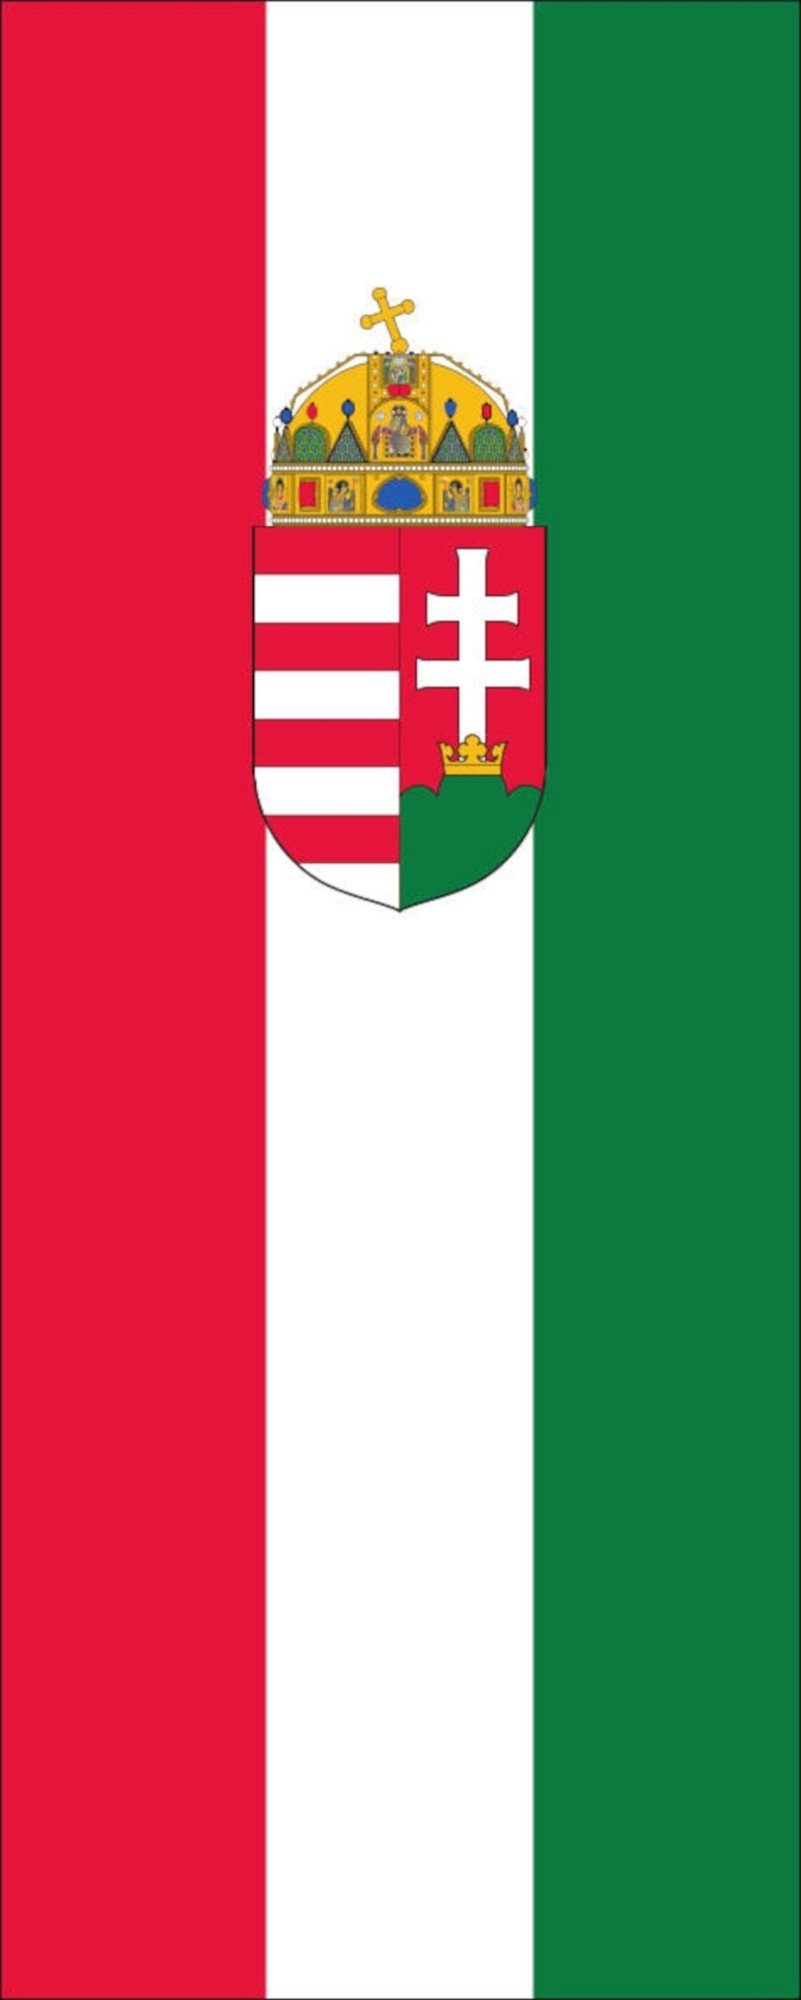 Flagge Wappen g/m² 160 Ungarn Hochformat mit flaggenmeer